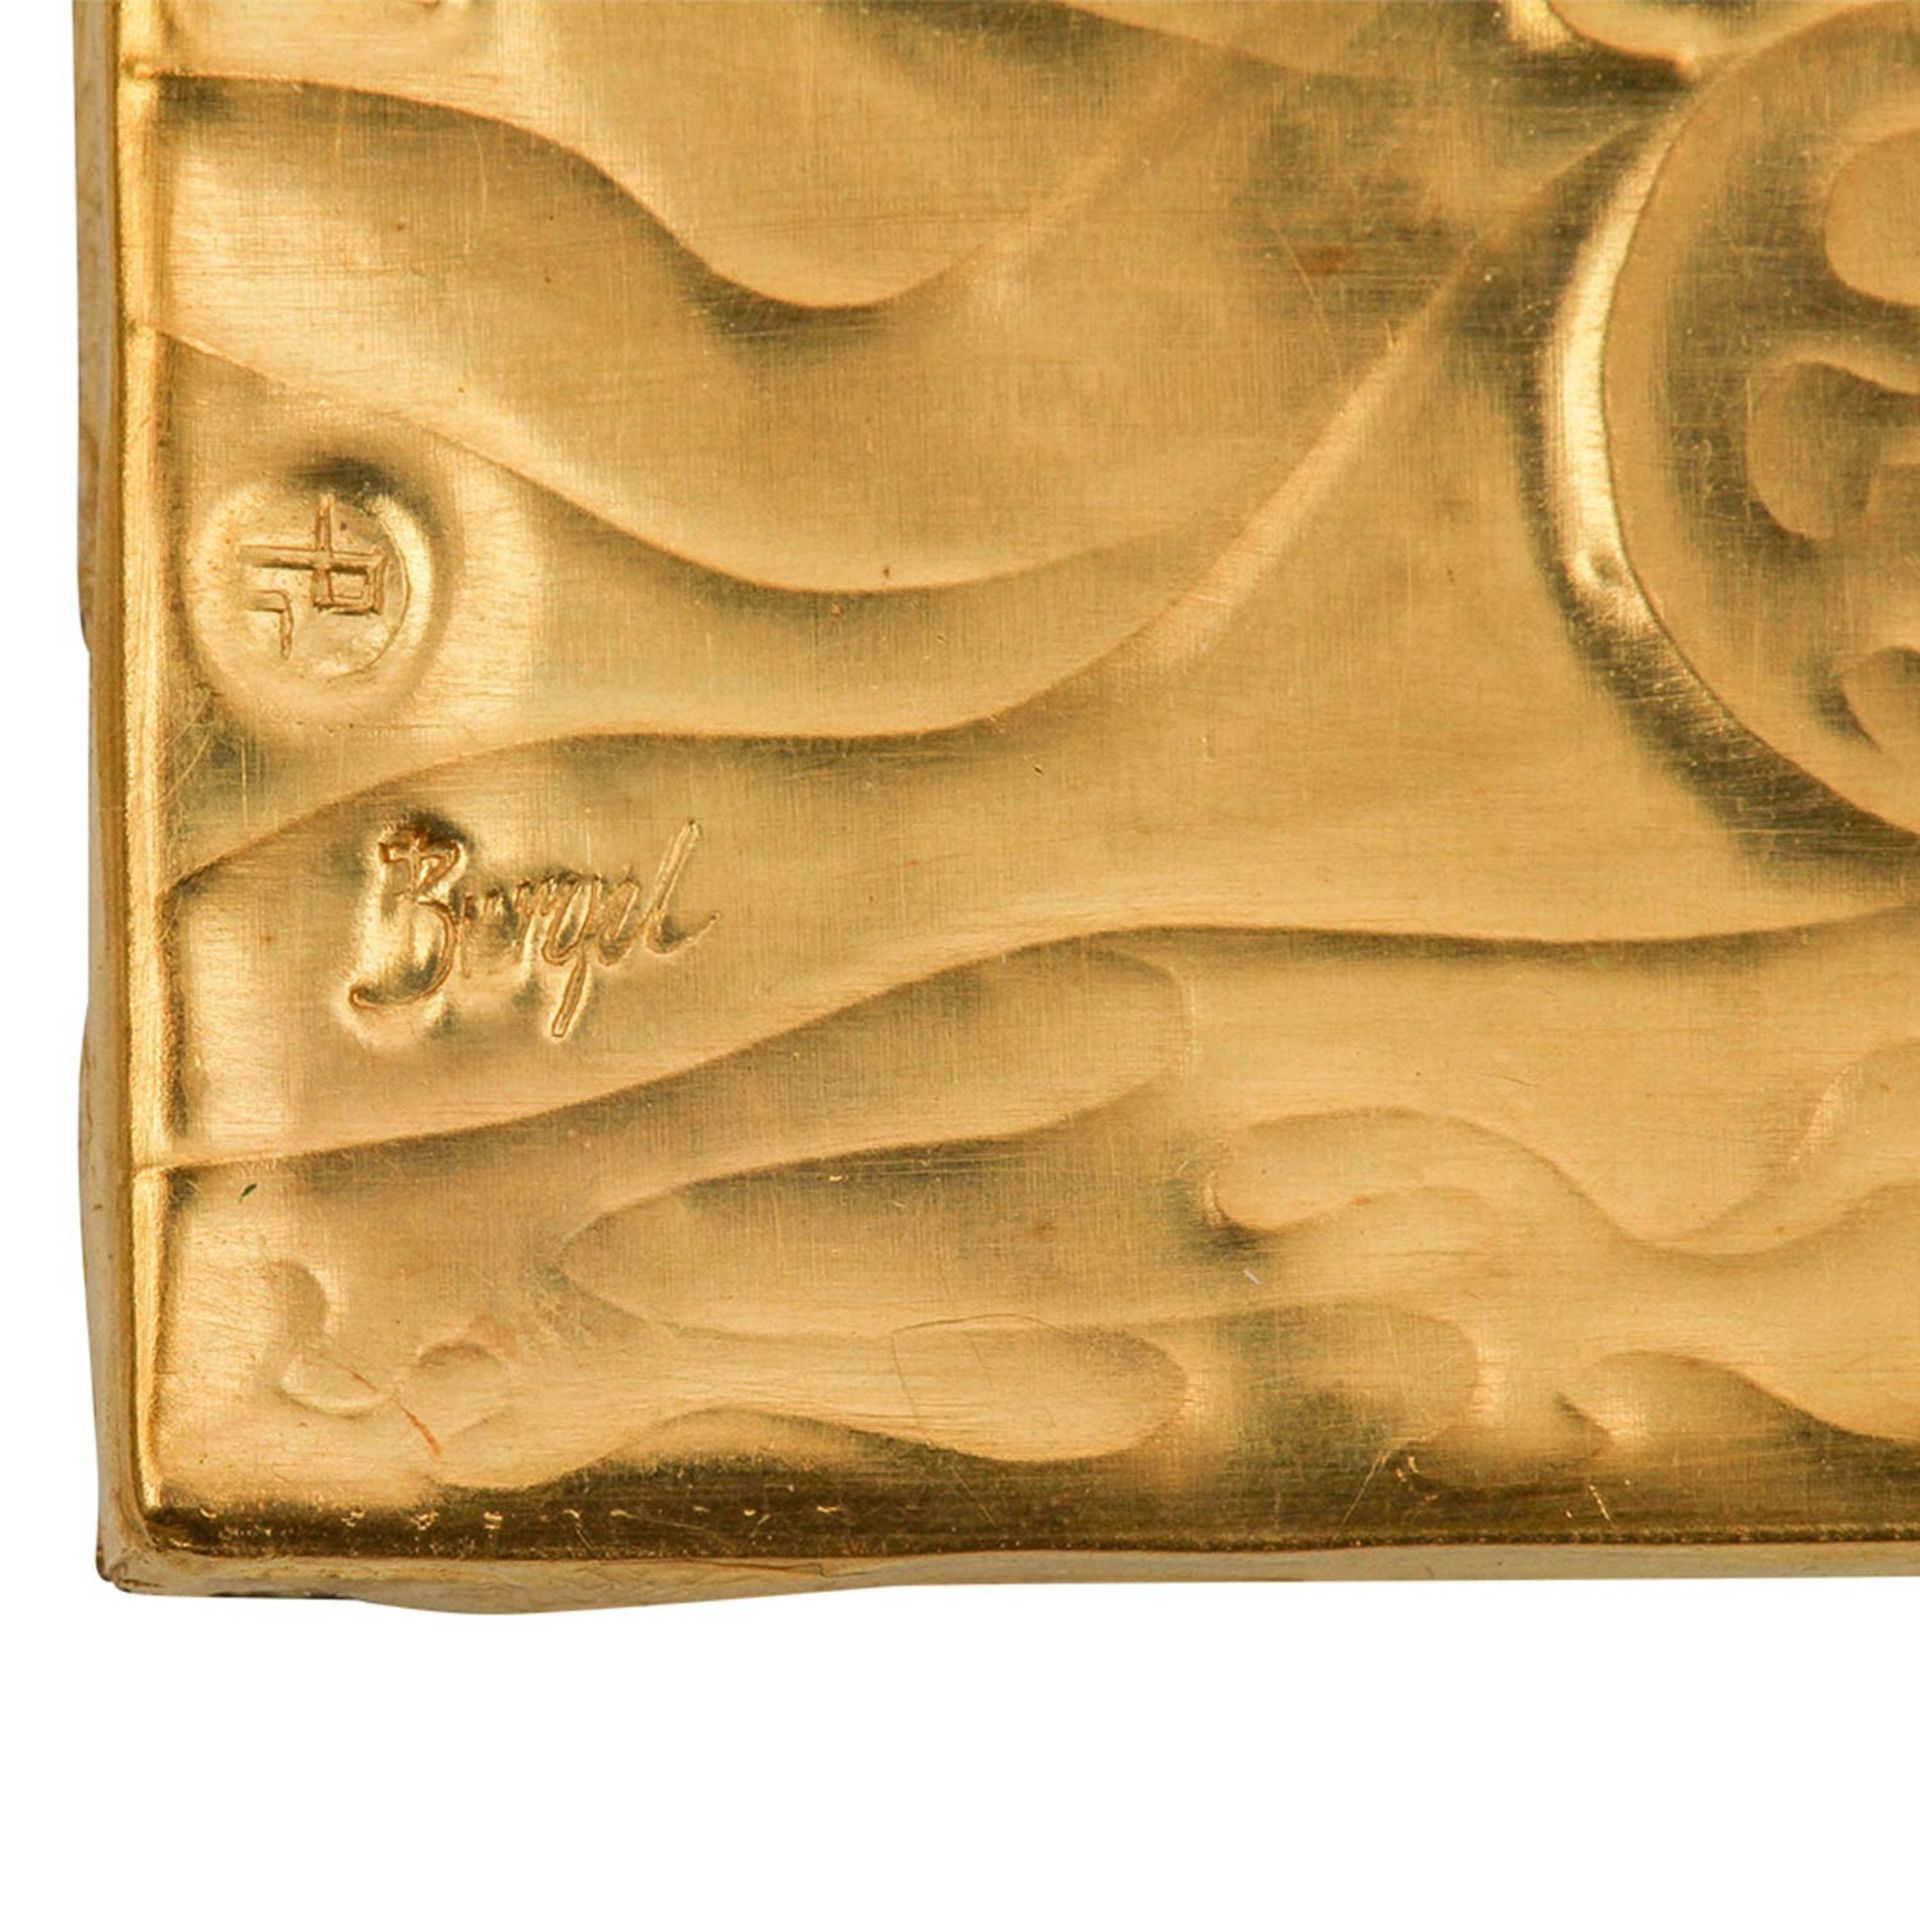 Goldminiatur "Semé" (1966) von E. BURGEL,Gold 900, gerieben + ziseliert, quadratisch, auf Acryl - Image 5 of 6